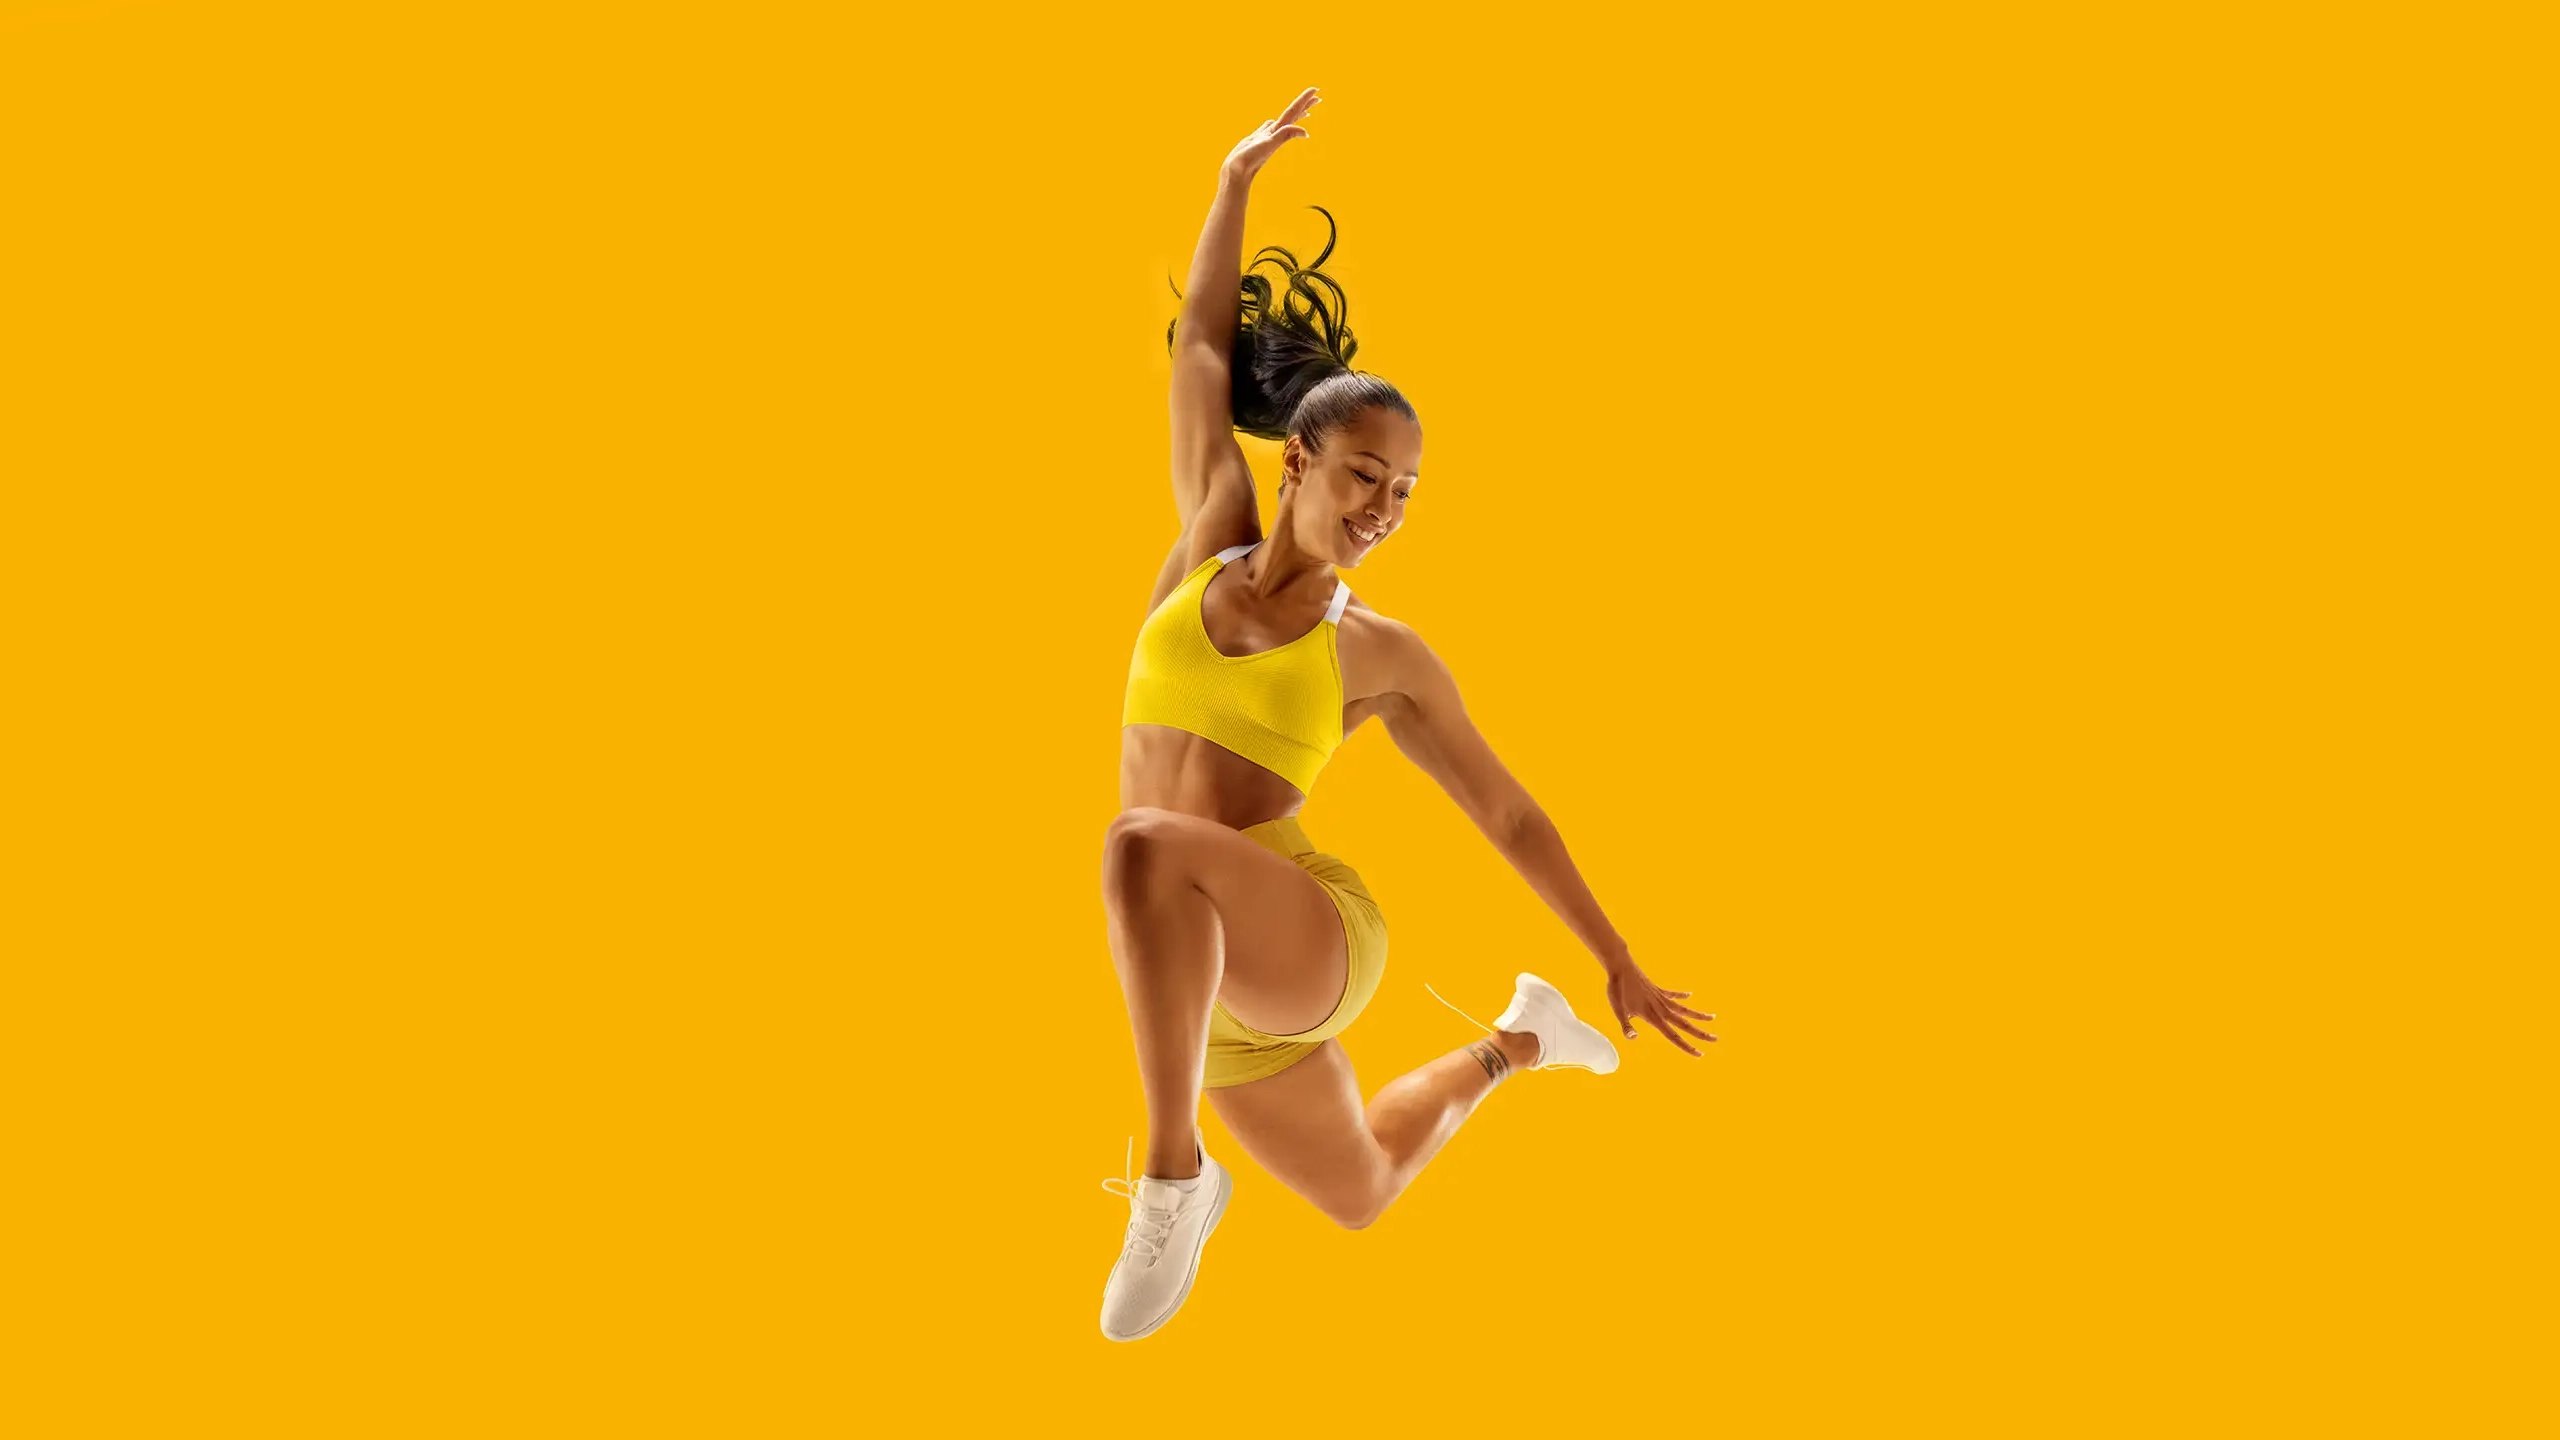 McFIT atleta che salta su sfondo giallo